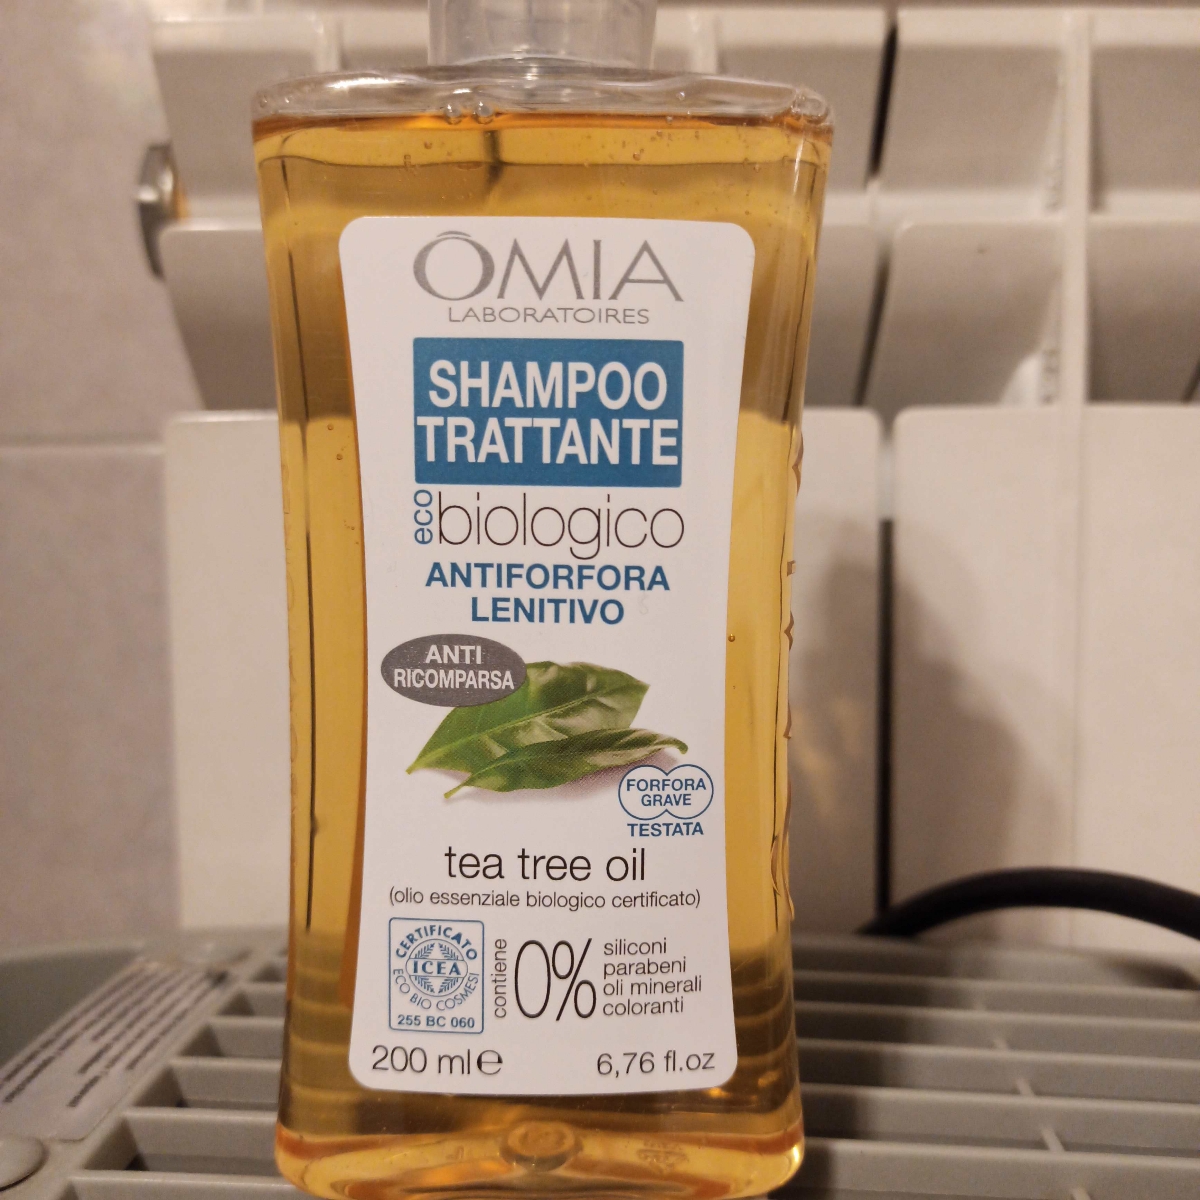 Omia Laboratoires Shampoo trattante anti forfora Review | abillion